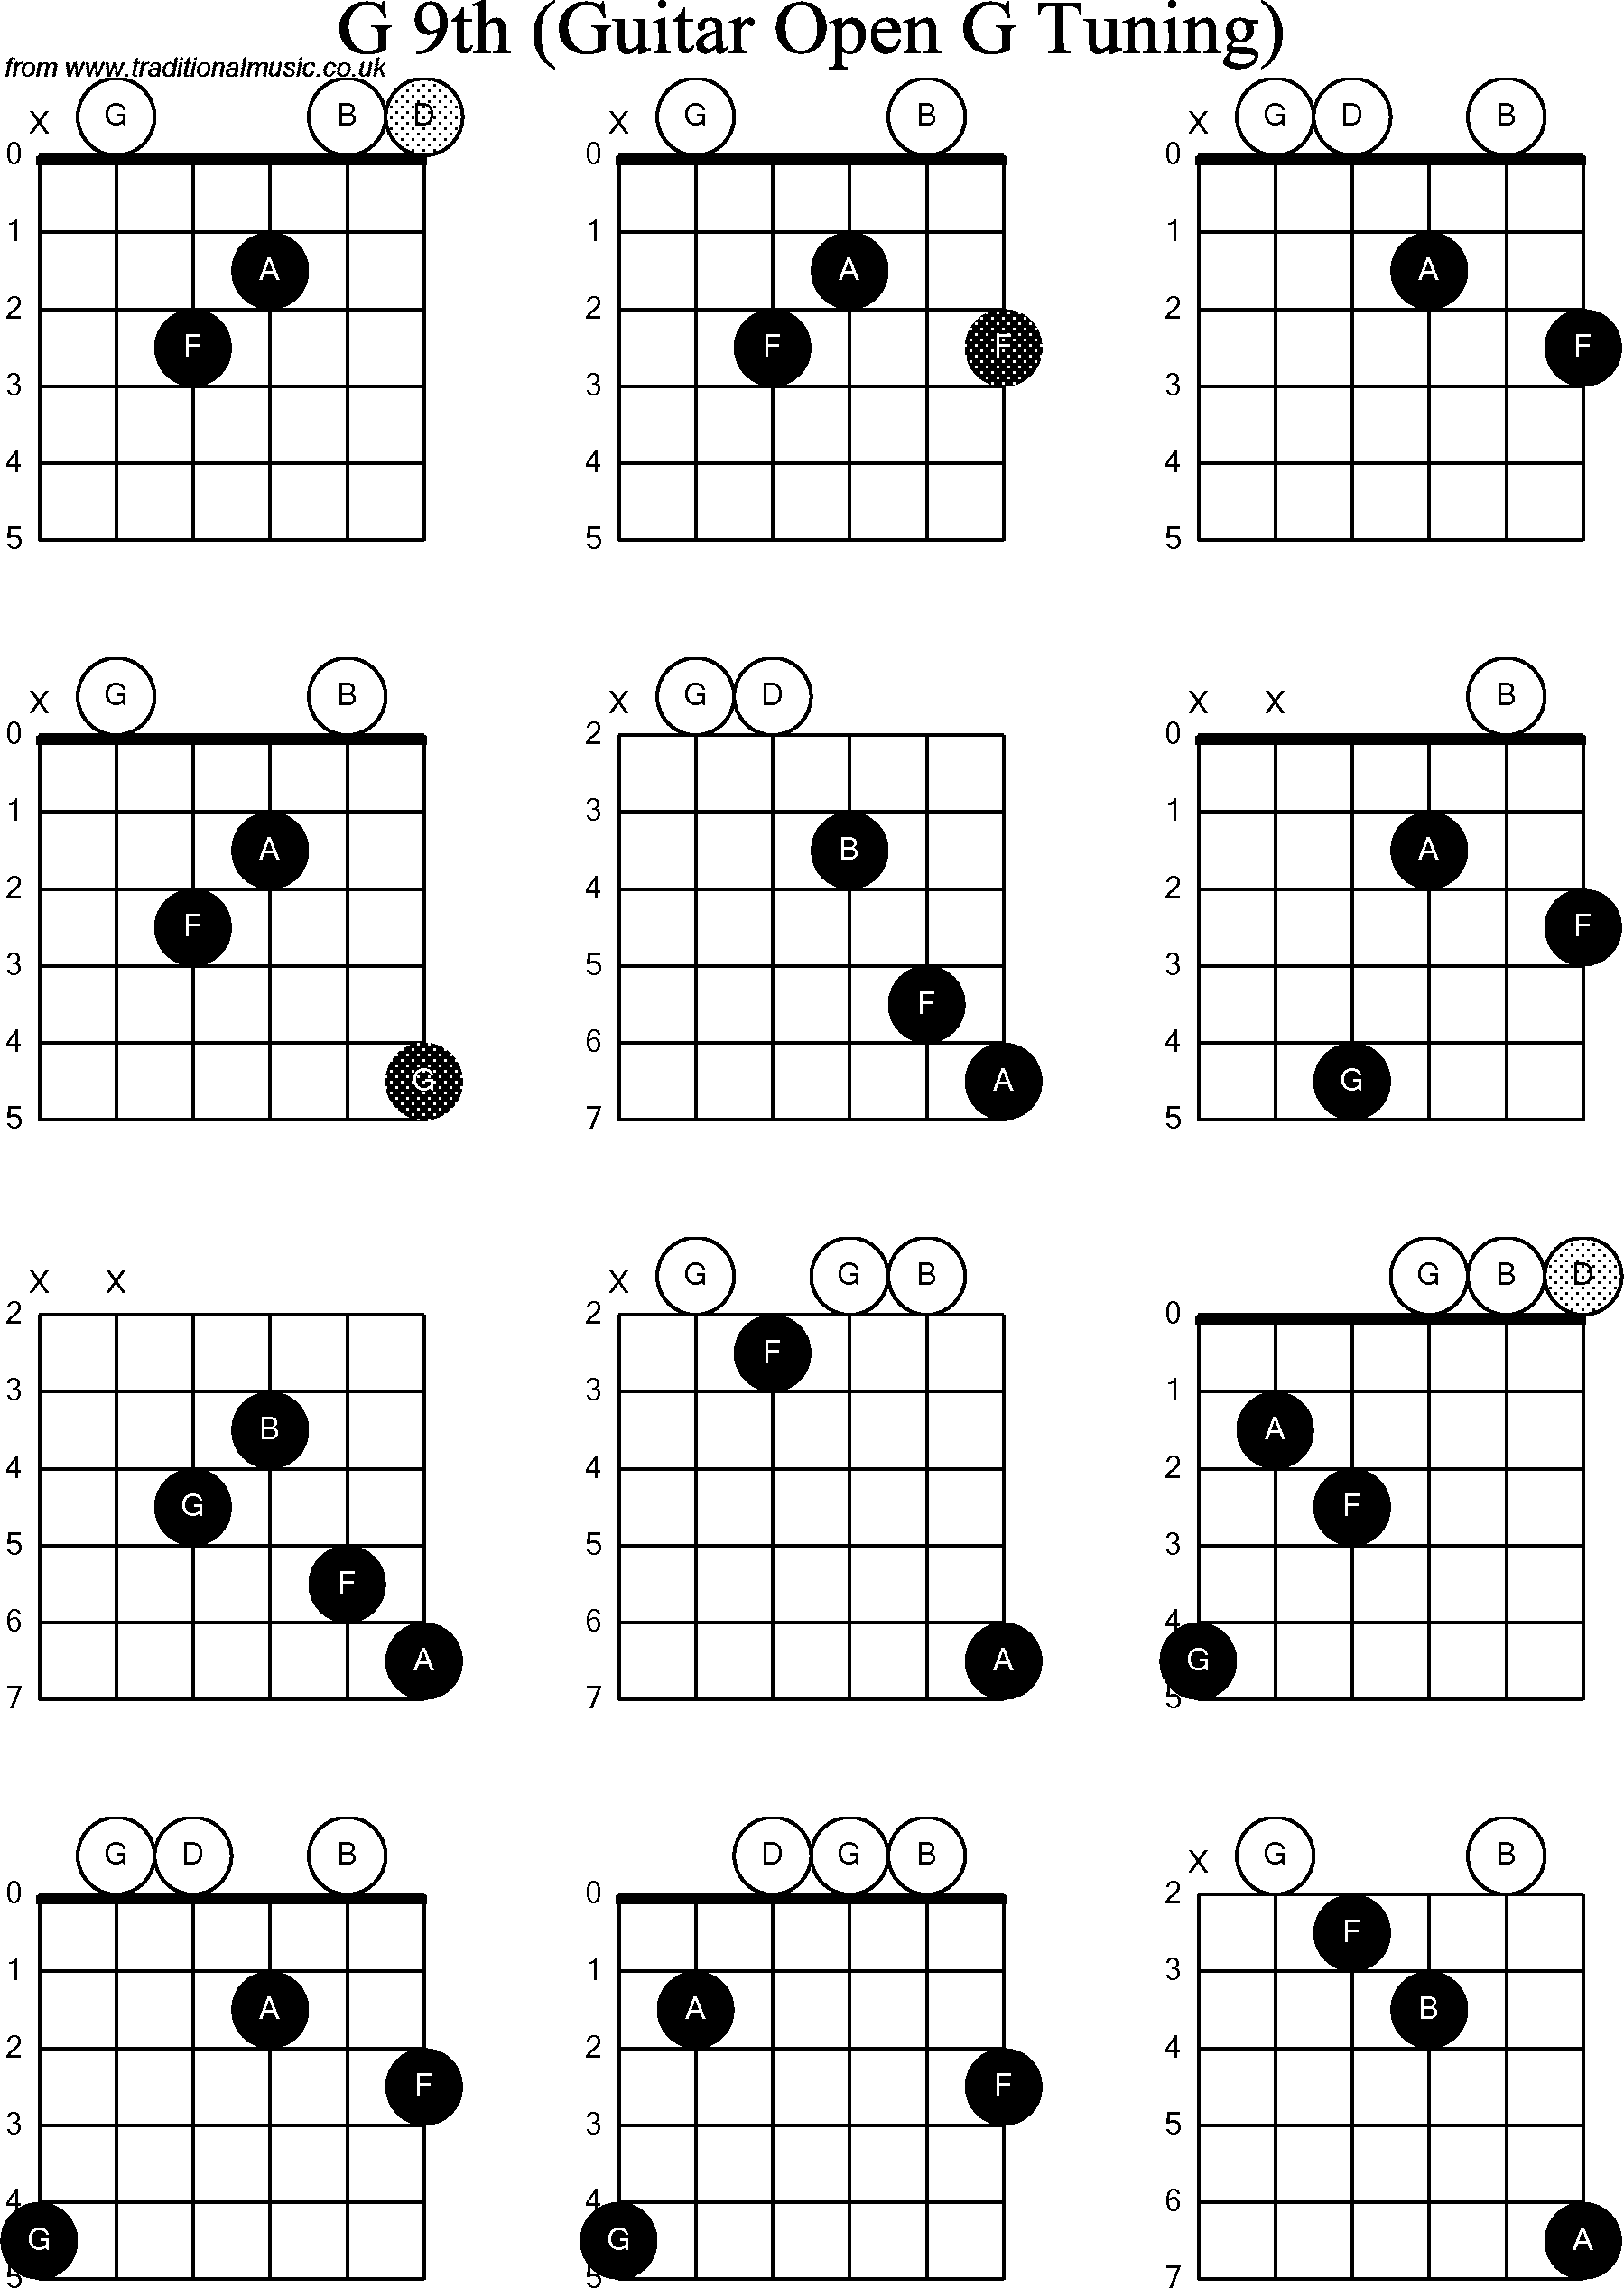 Chord diagrams for Dobro G9th